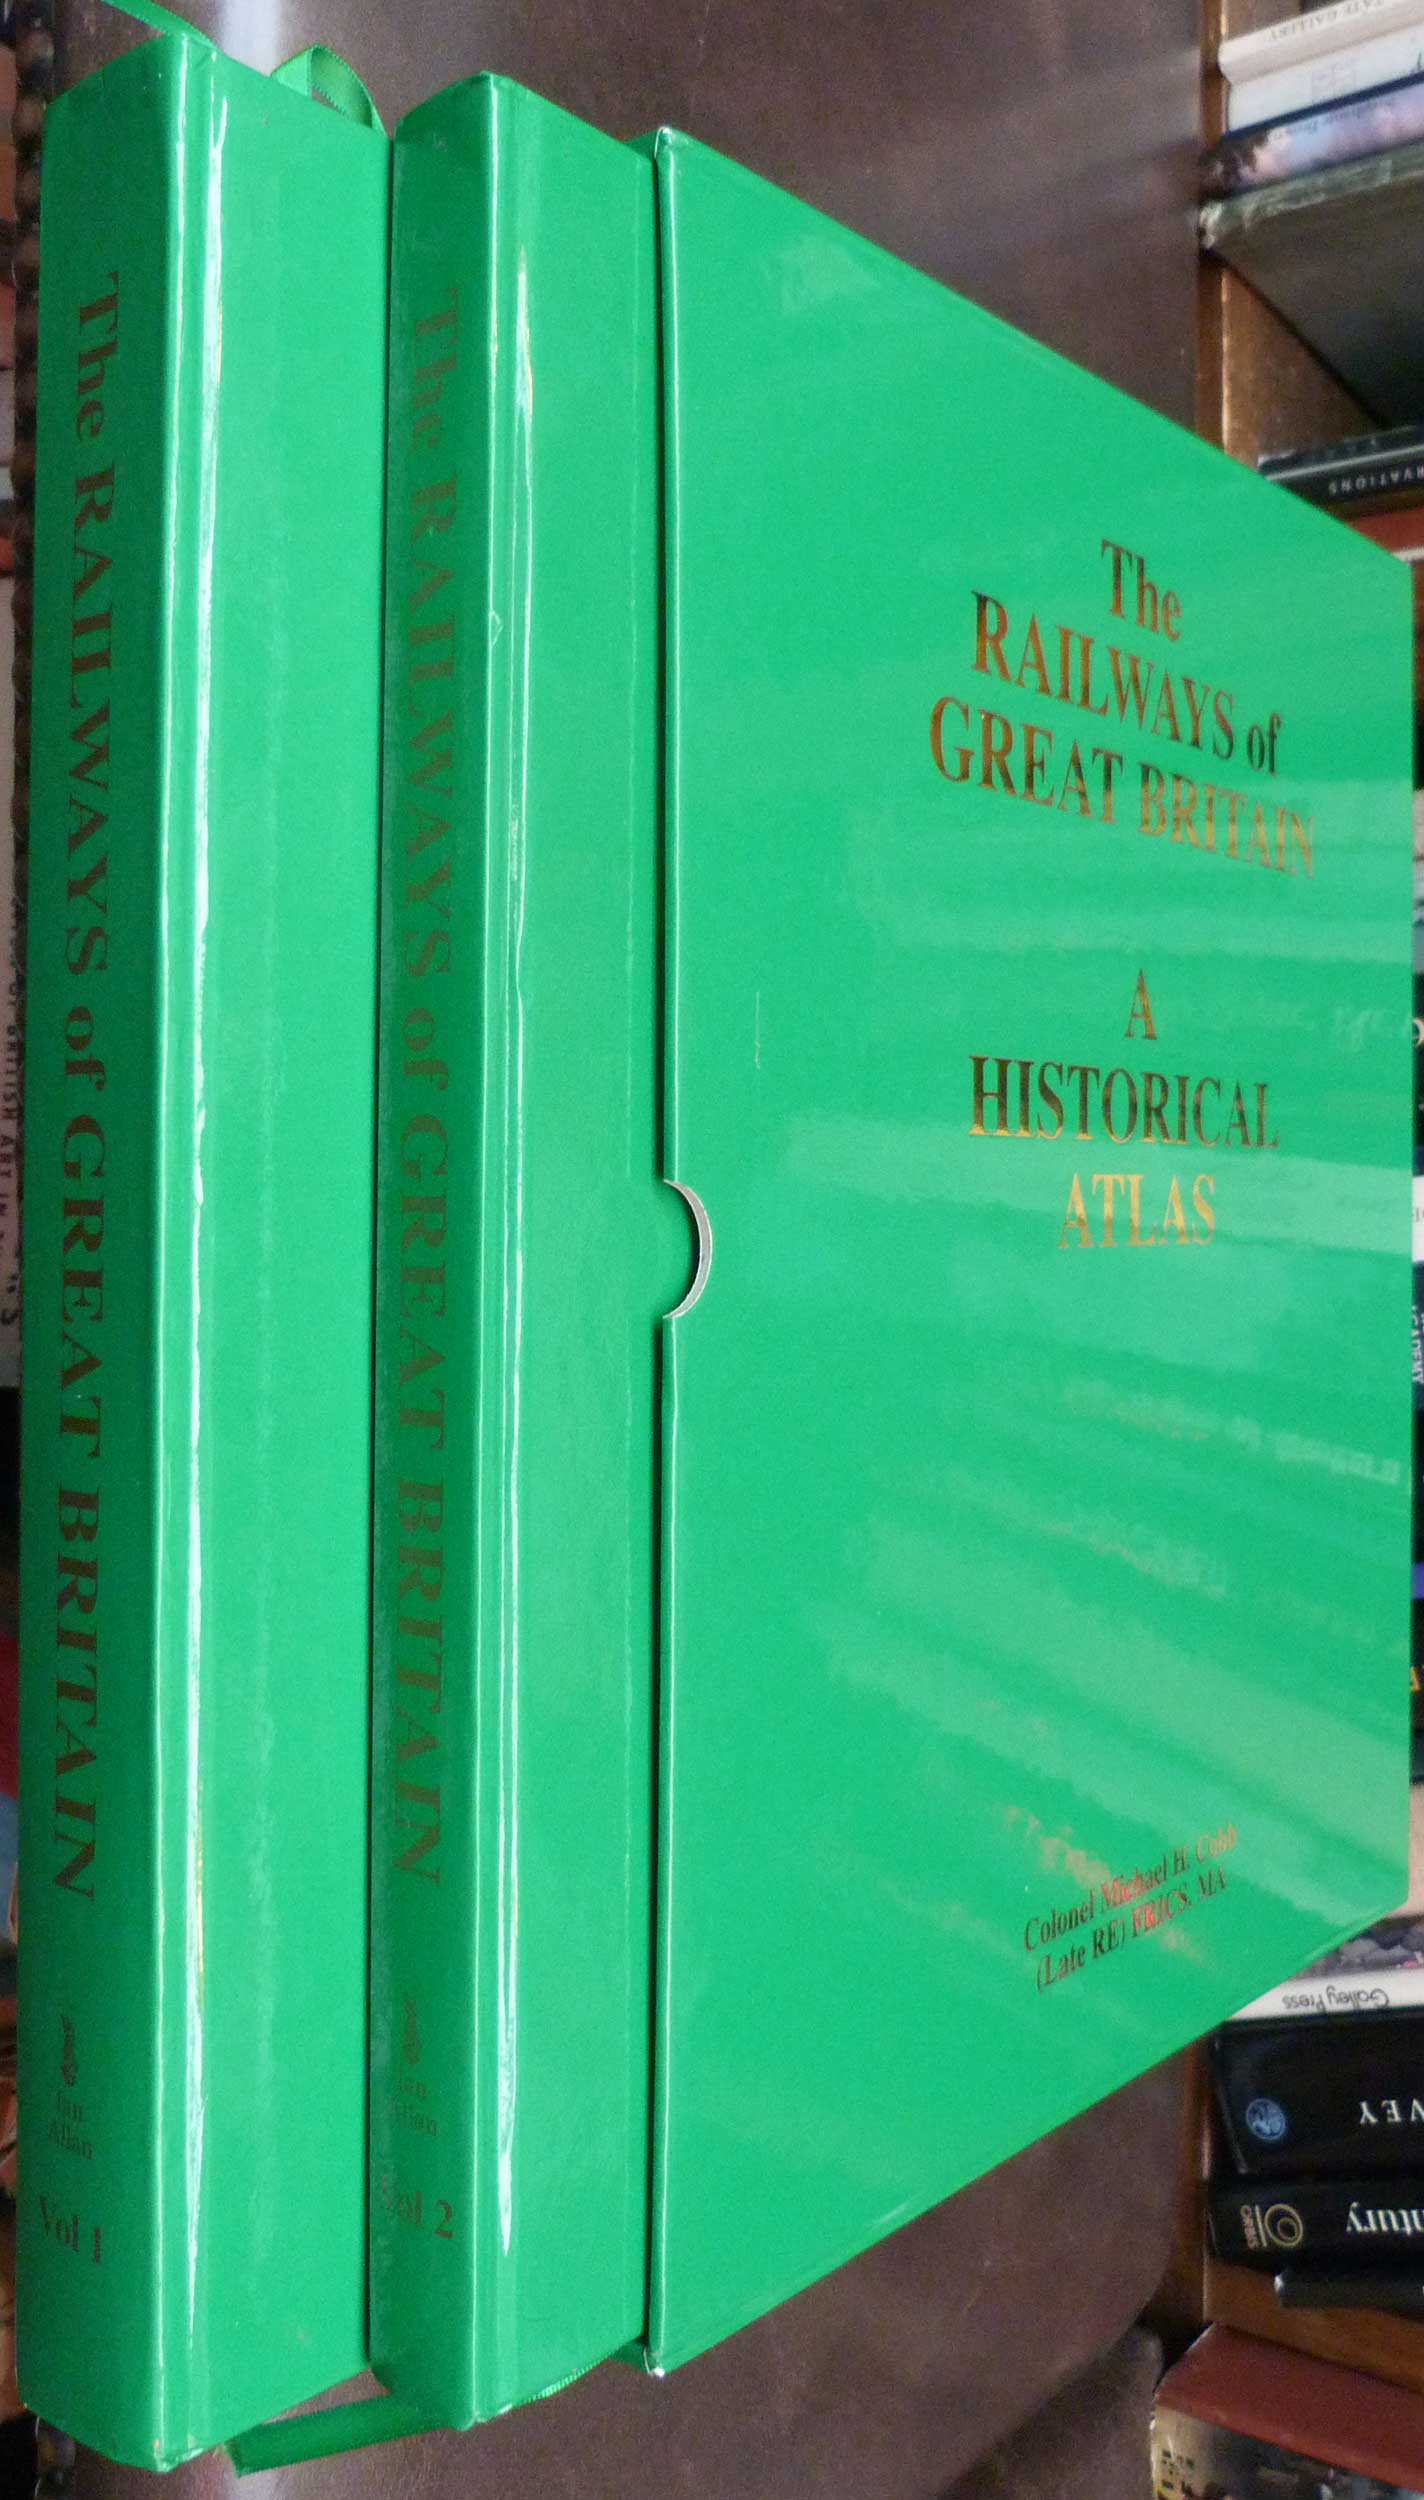 The Railways of Great Britain. A Historical Atlas. 2 volume set.